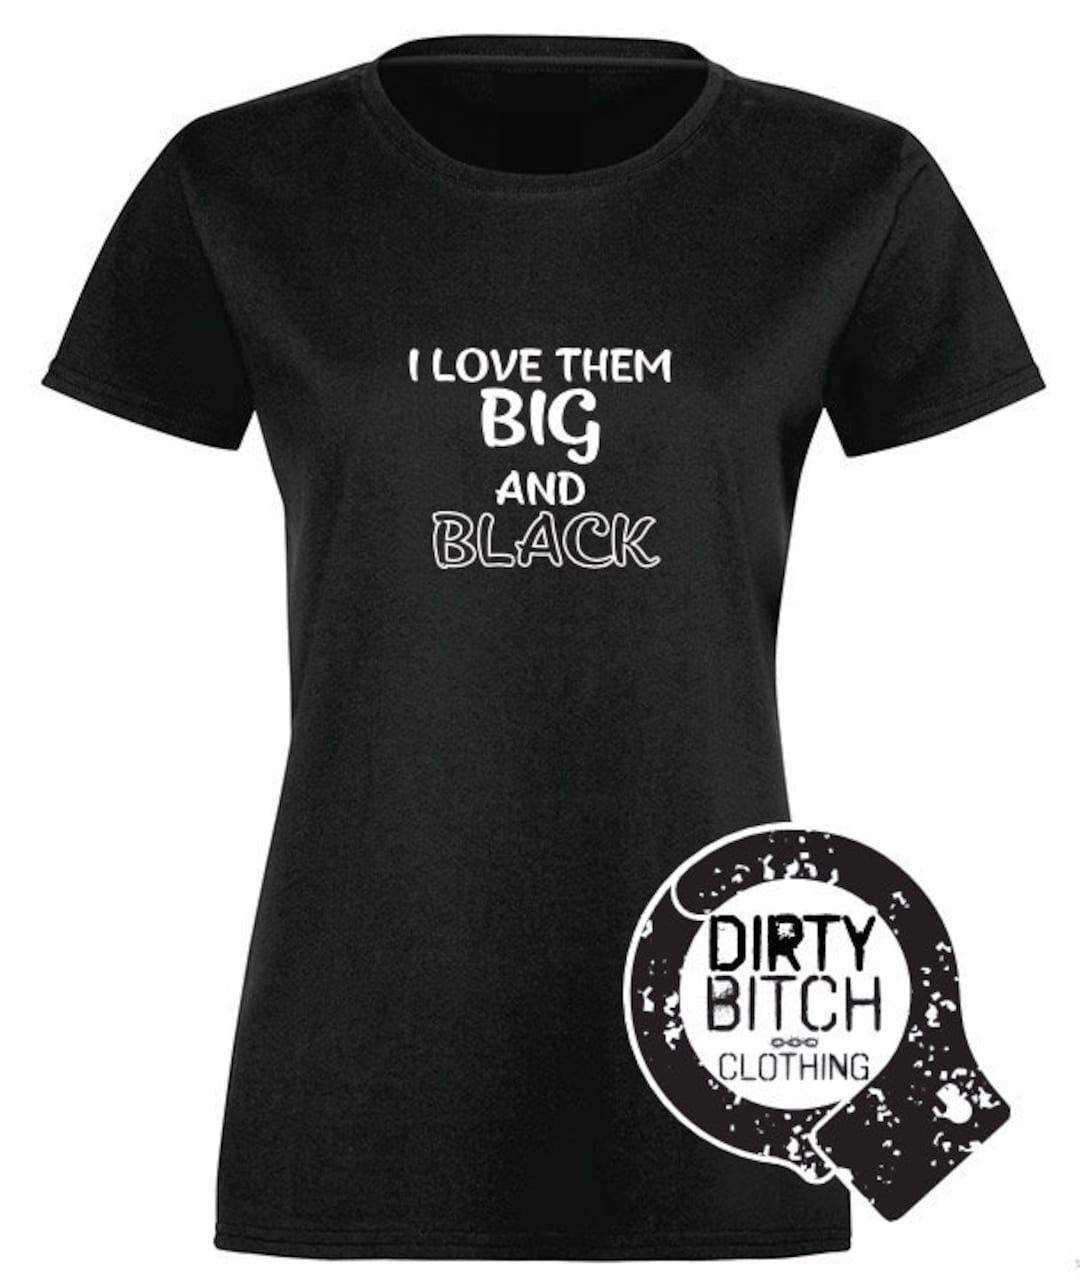 I Like Them Big and Black Adult T-shirt Clothing Boobs image